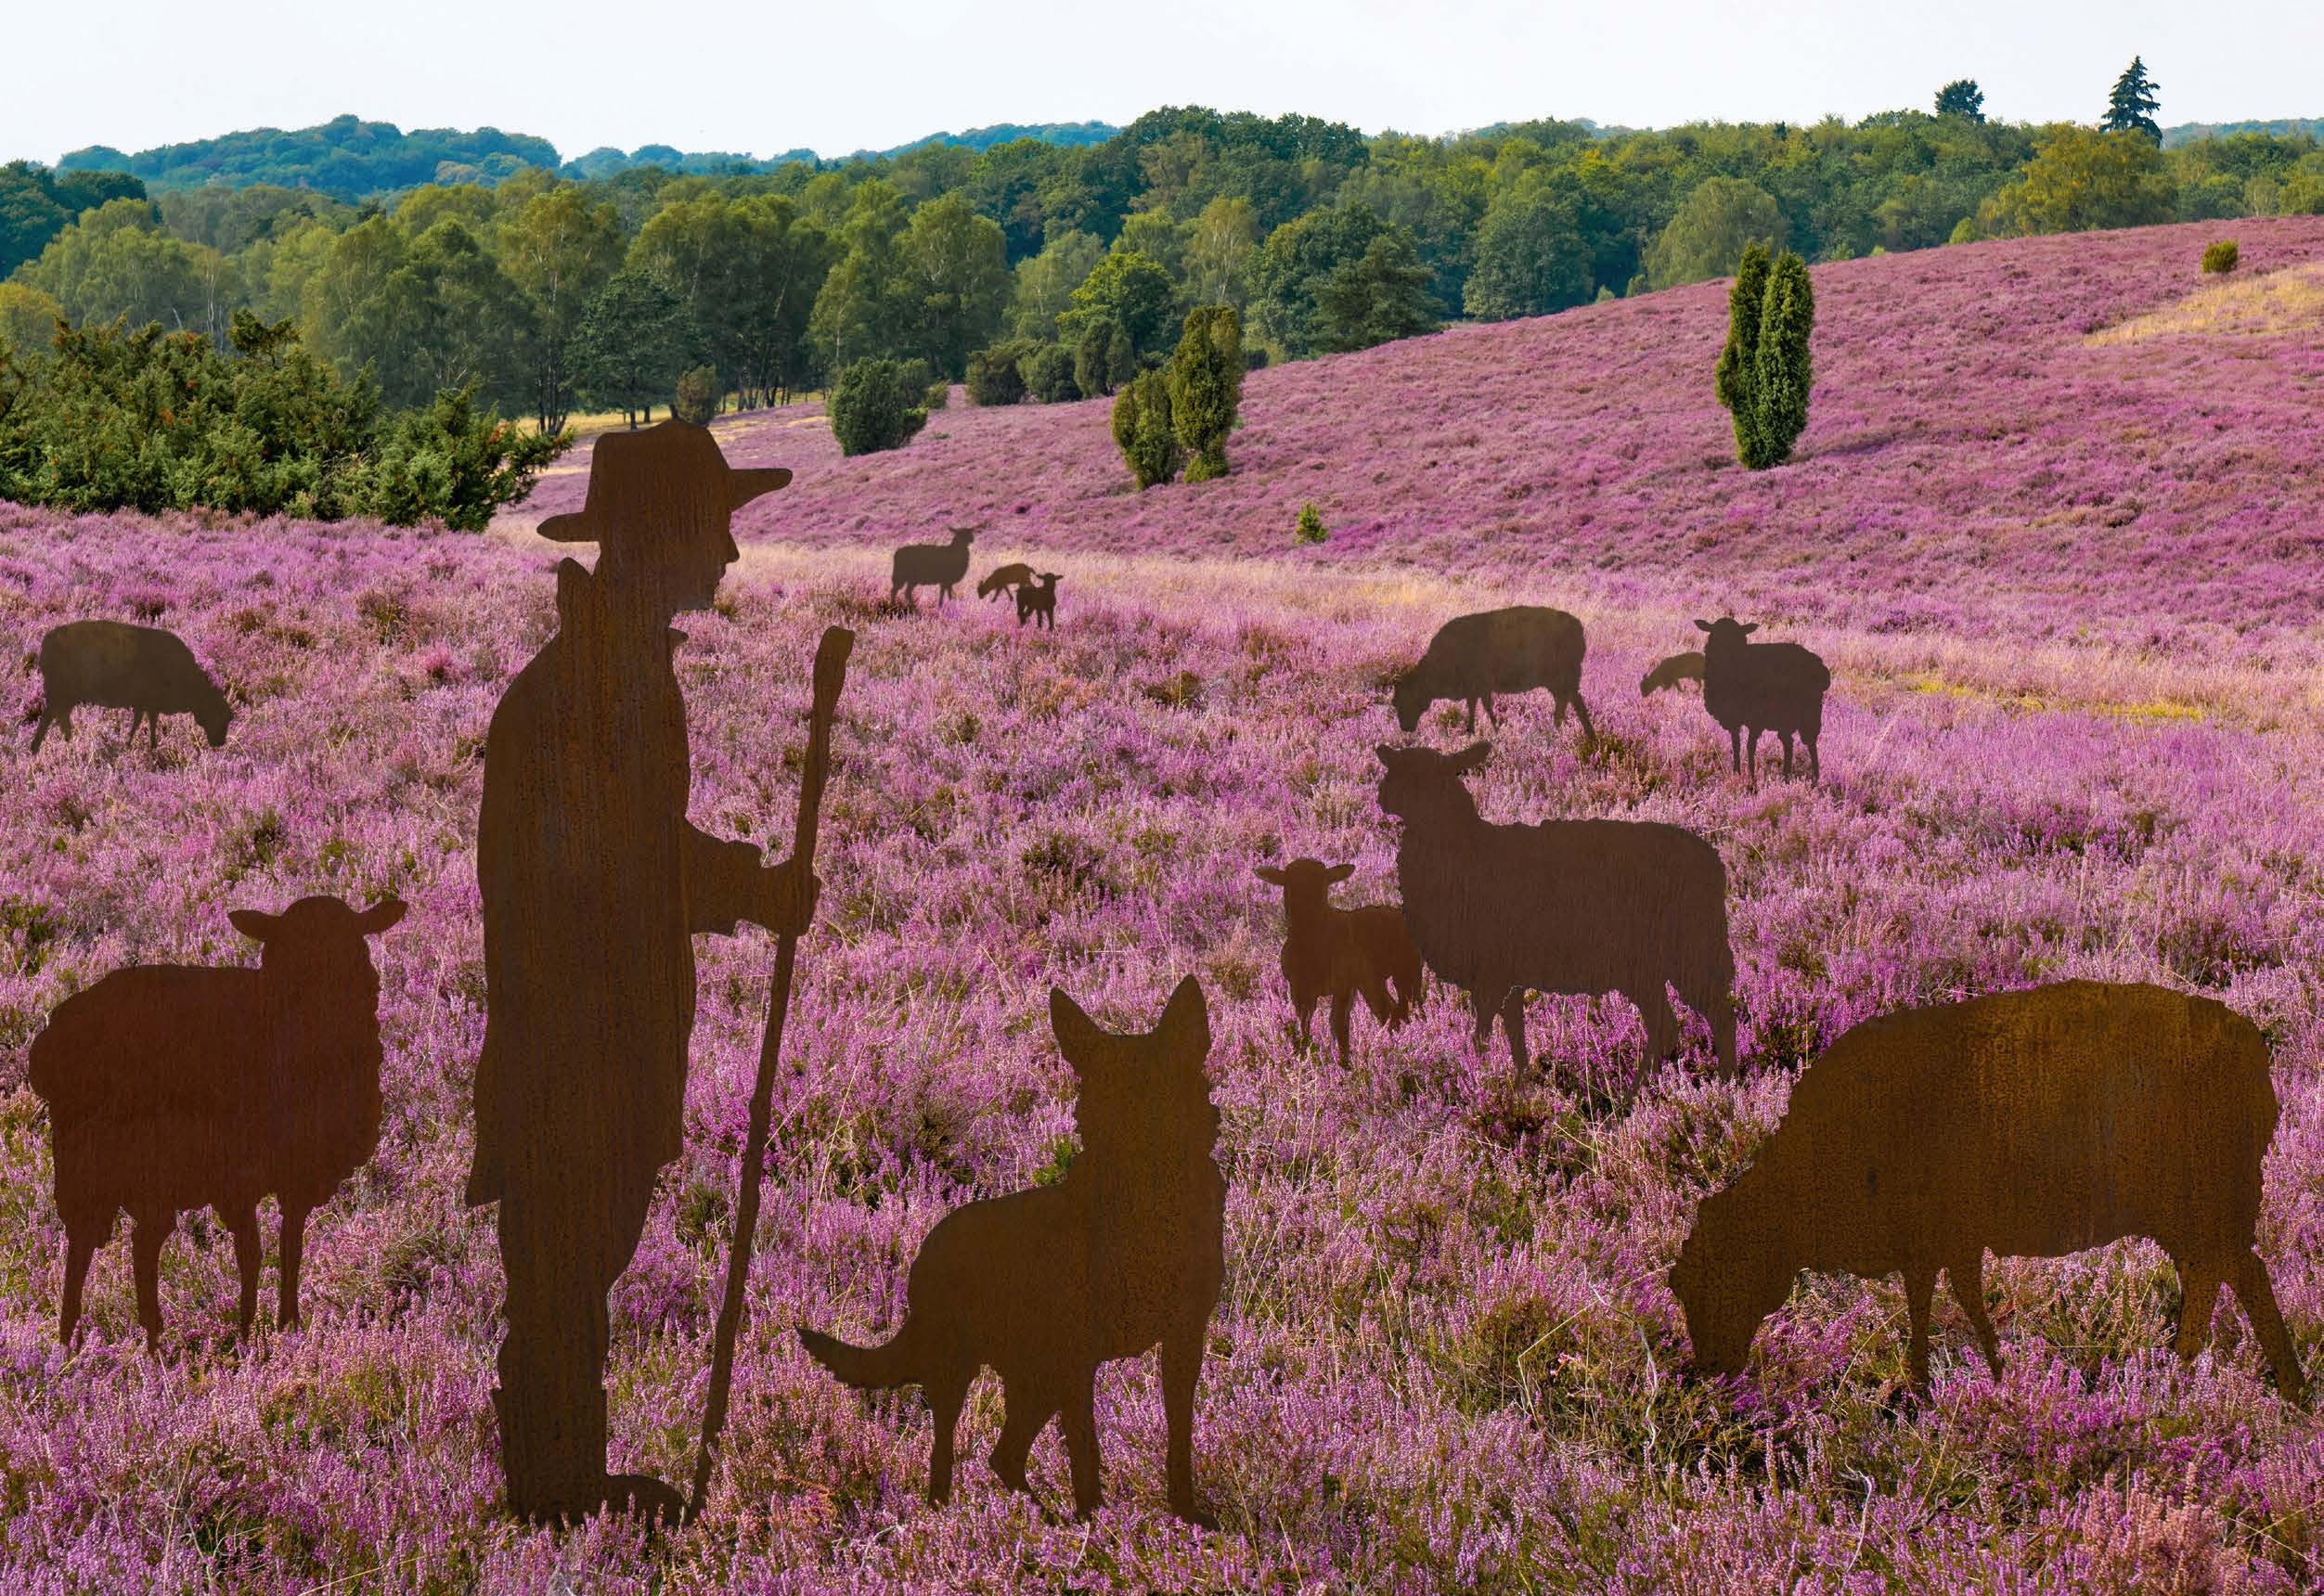 SChafherde bild in der Toscana im Lavendel Feld